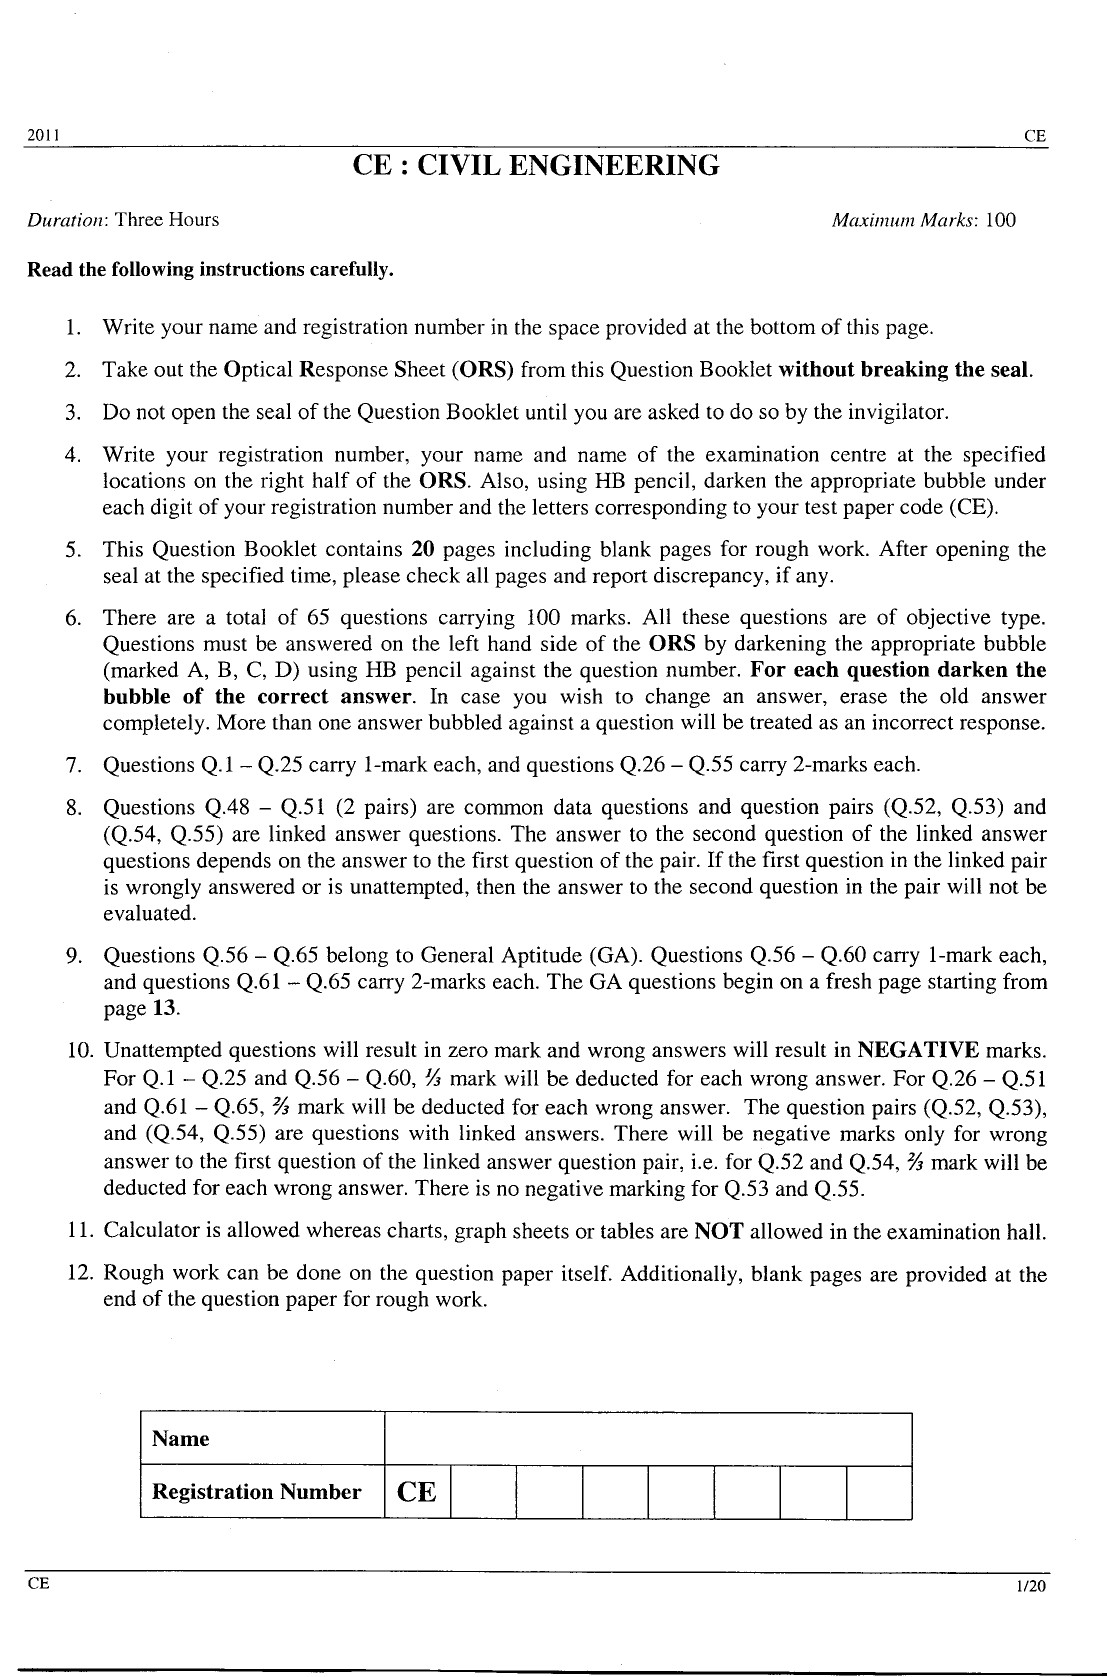 GATE Exam Question Paper 2011 Civil Engineering 1